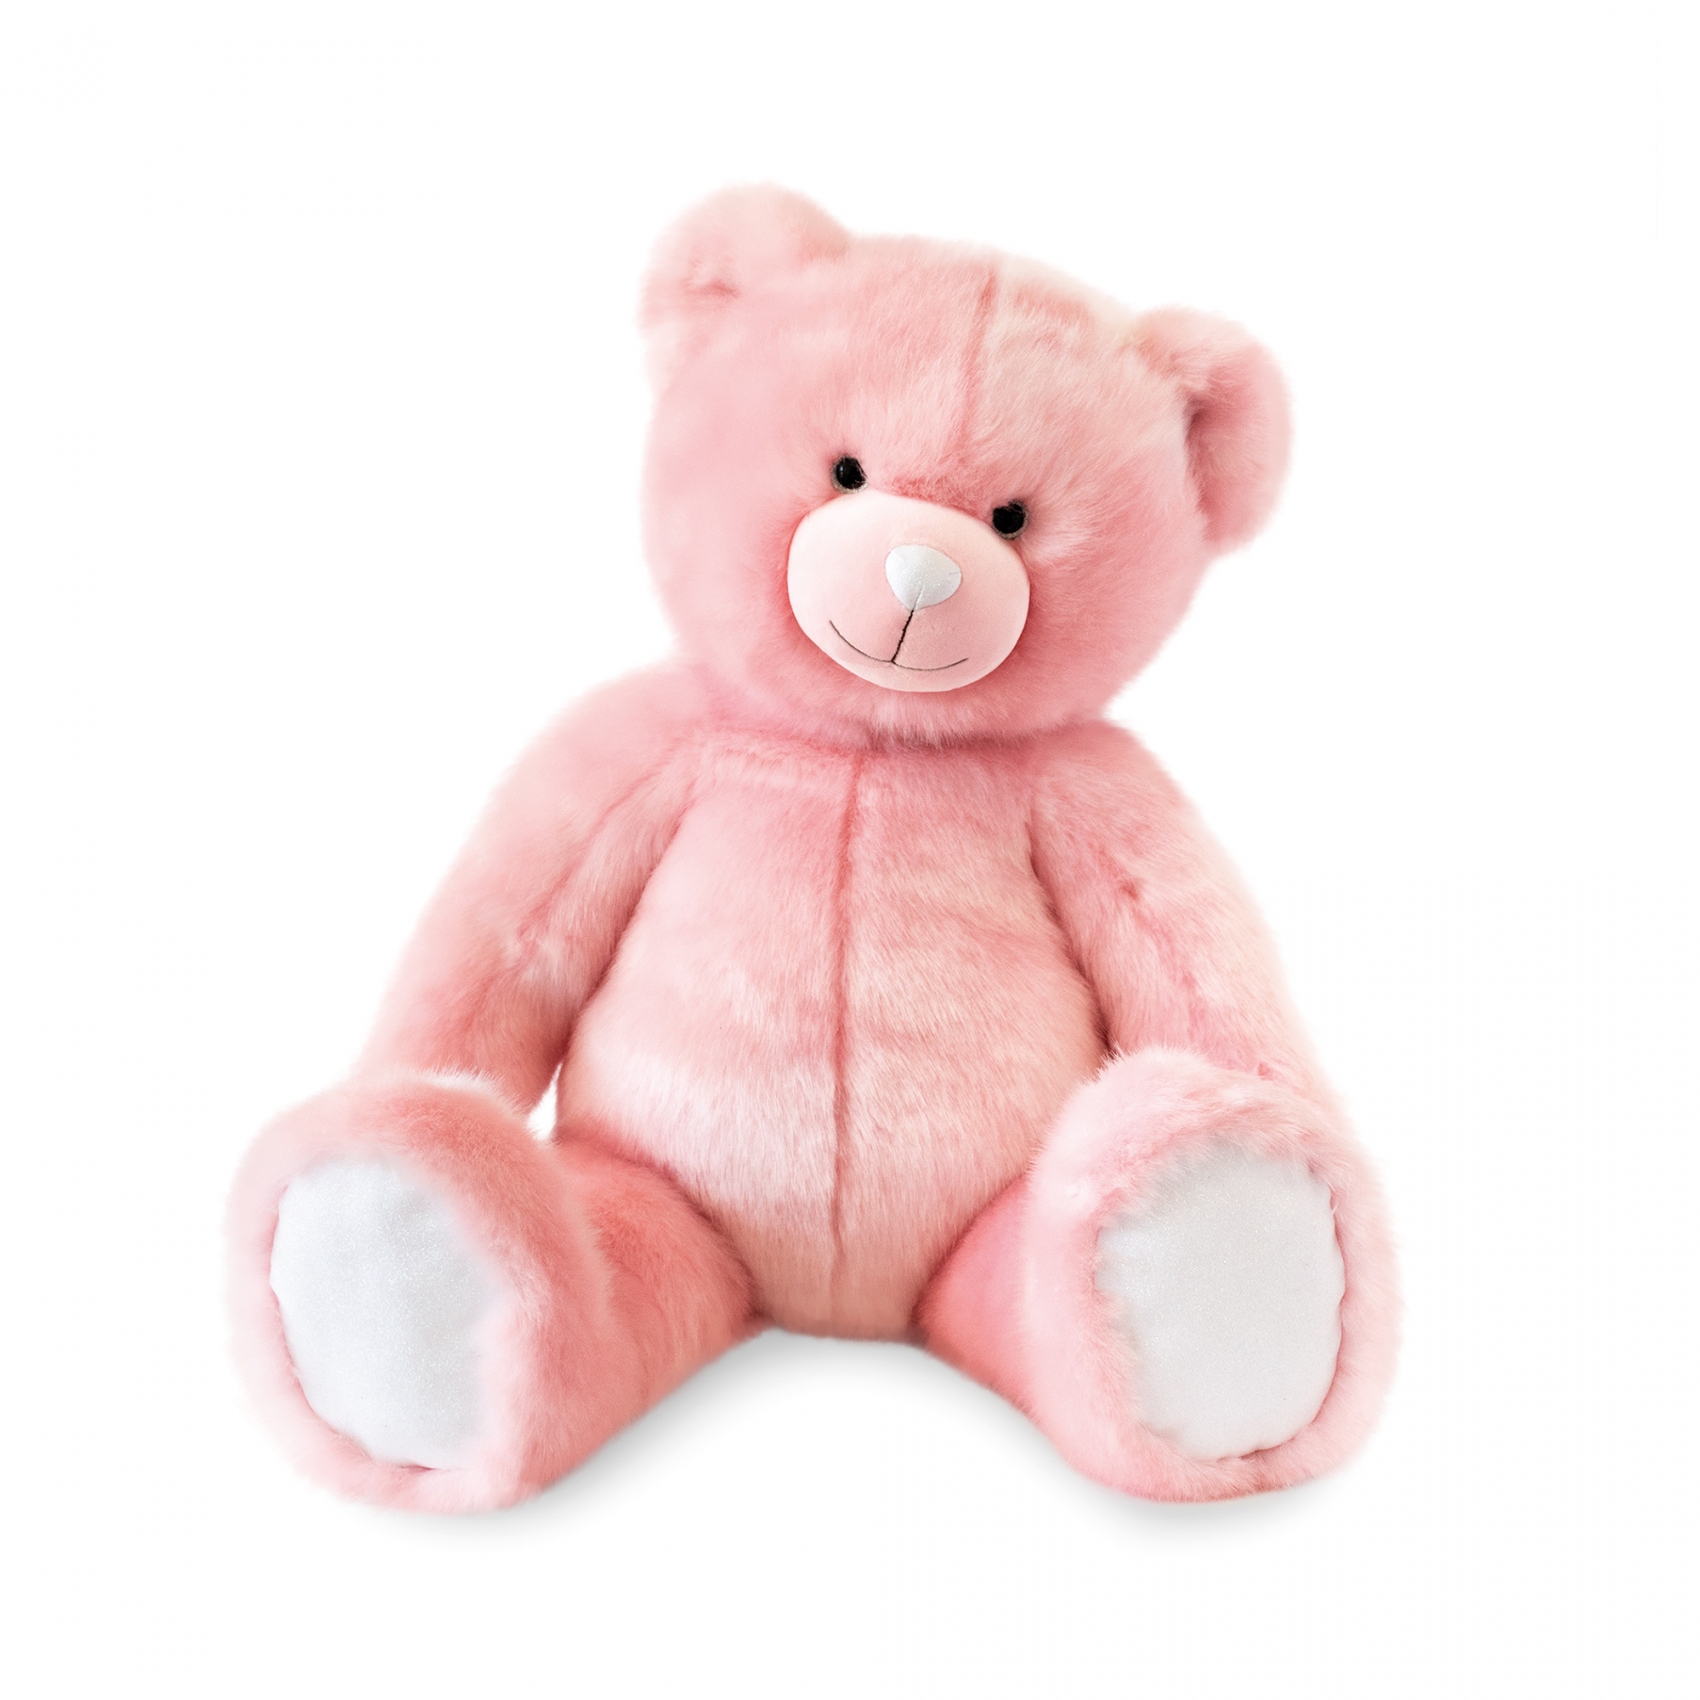 Розовый мишка игрушка. Doudou et compagnie игрушки. Мягкая игрушка розовый медведь. Розовый Медвежонок игрушка. Розовый медведь игрушка.